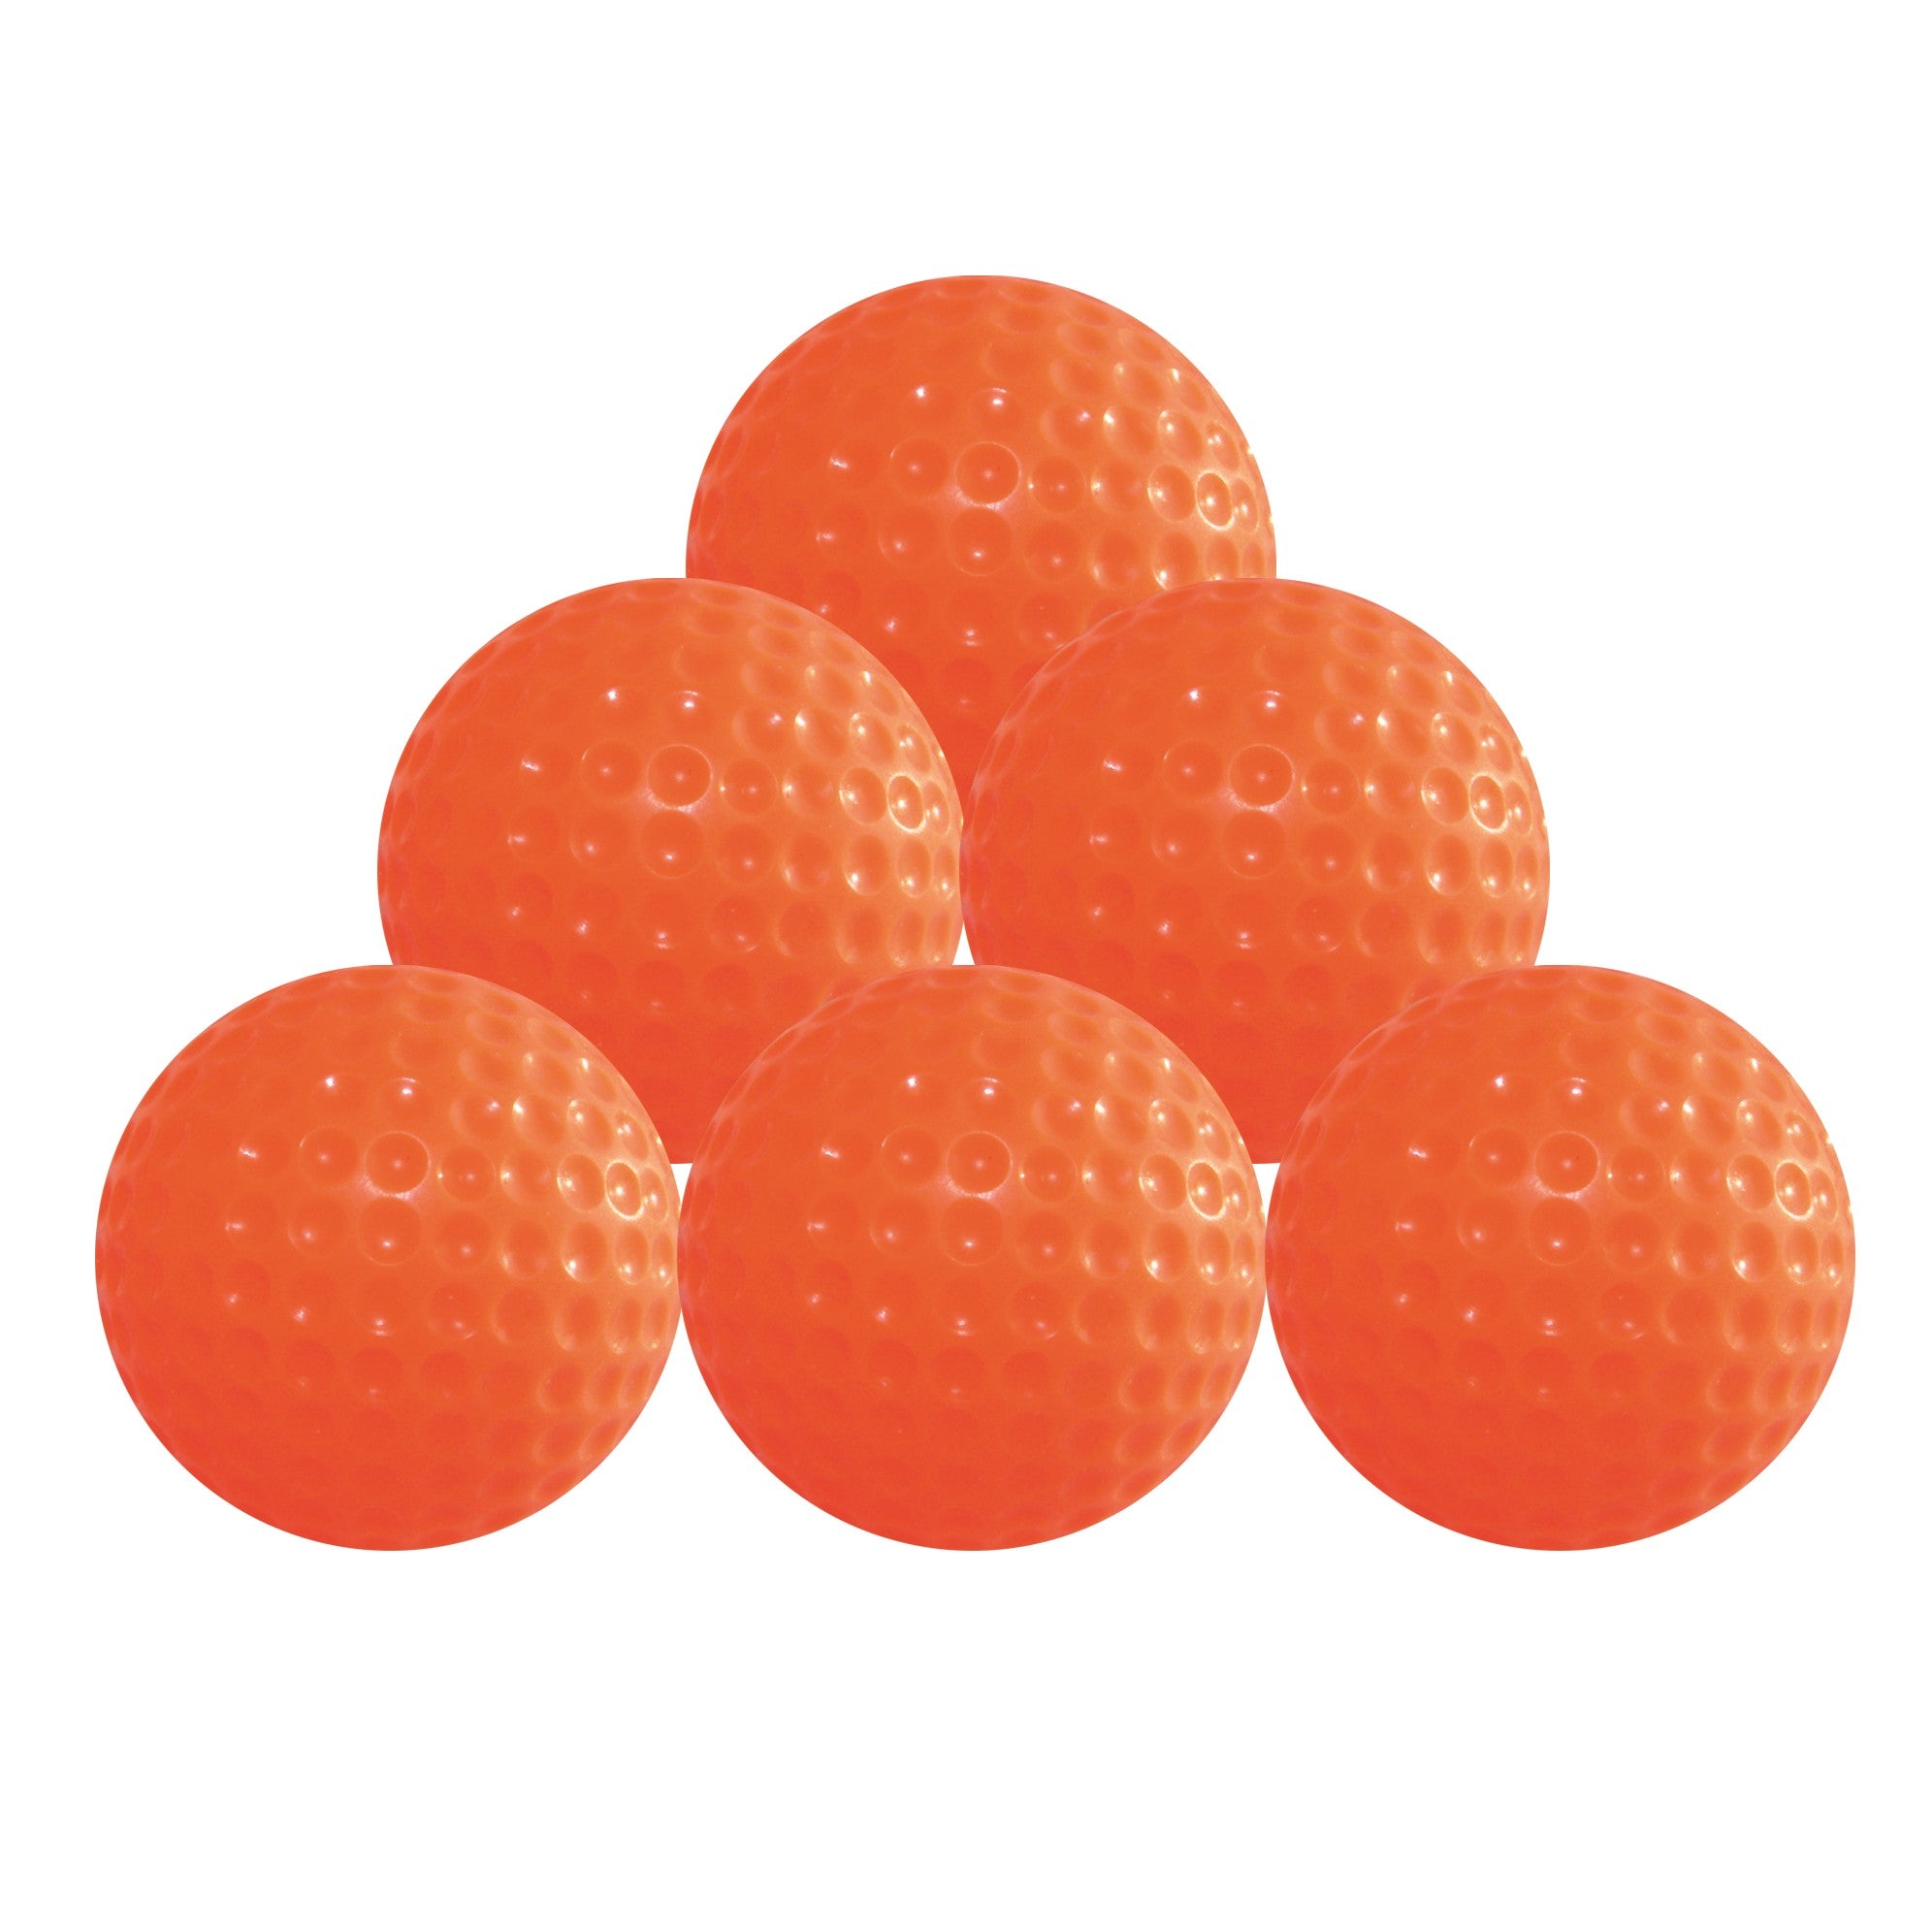 Jelly Practice balls golf